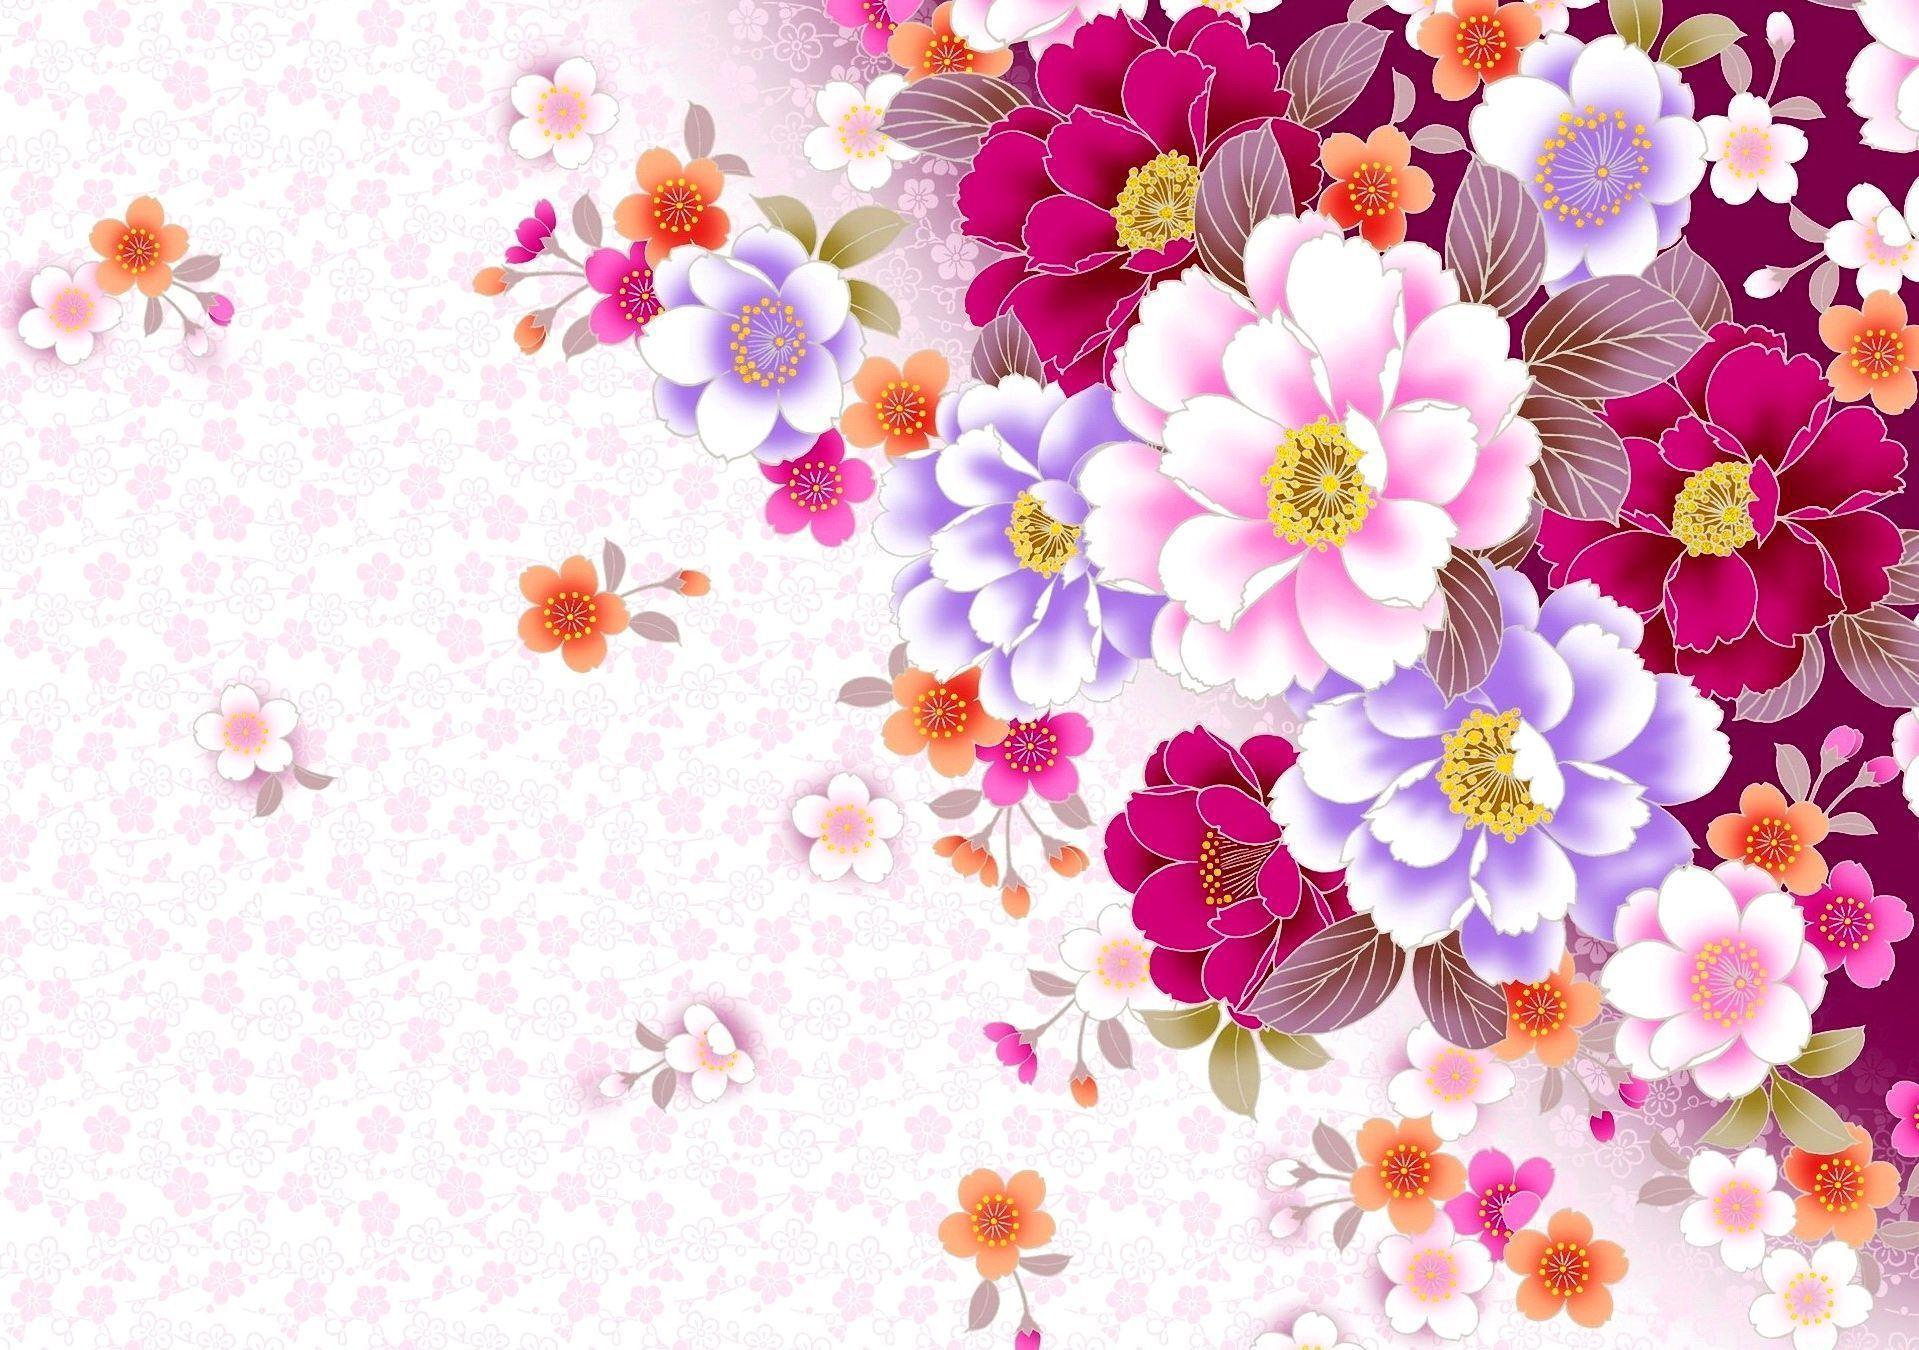 Floral Desktop Backgrounds Wallpaper Cave HD Wallpapers Download Free Images Wallpaper [wallpaper981.blogspot.com]